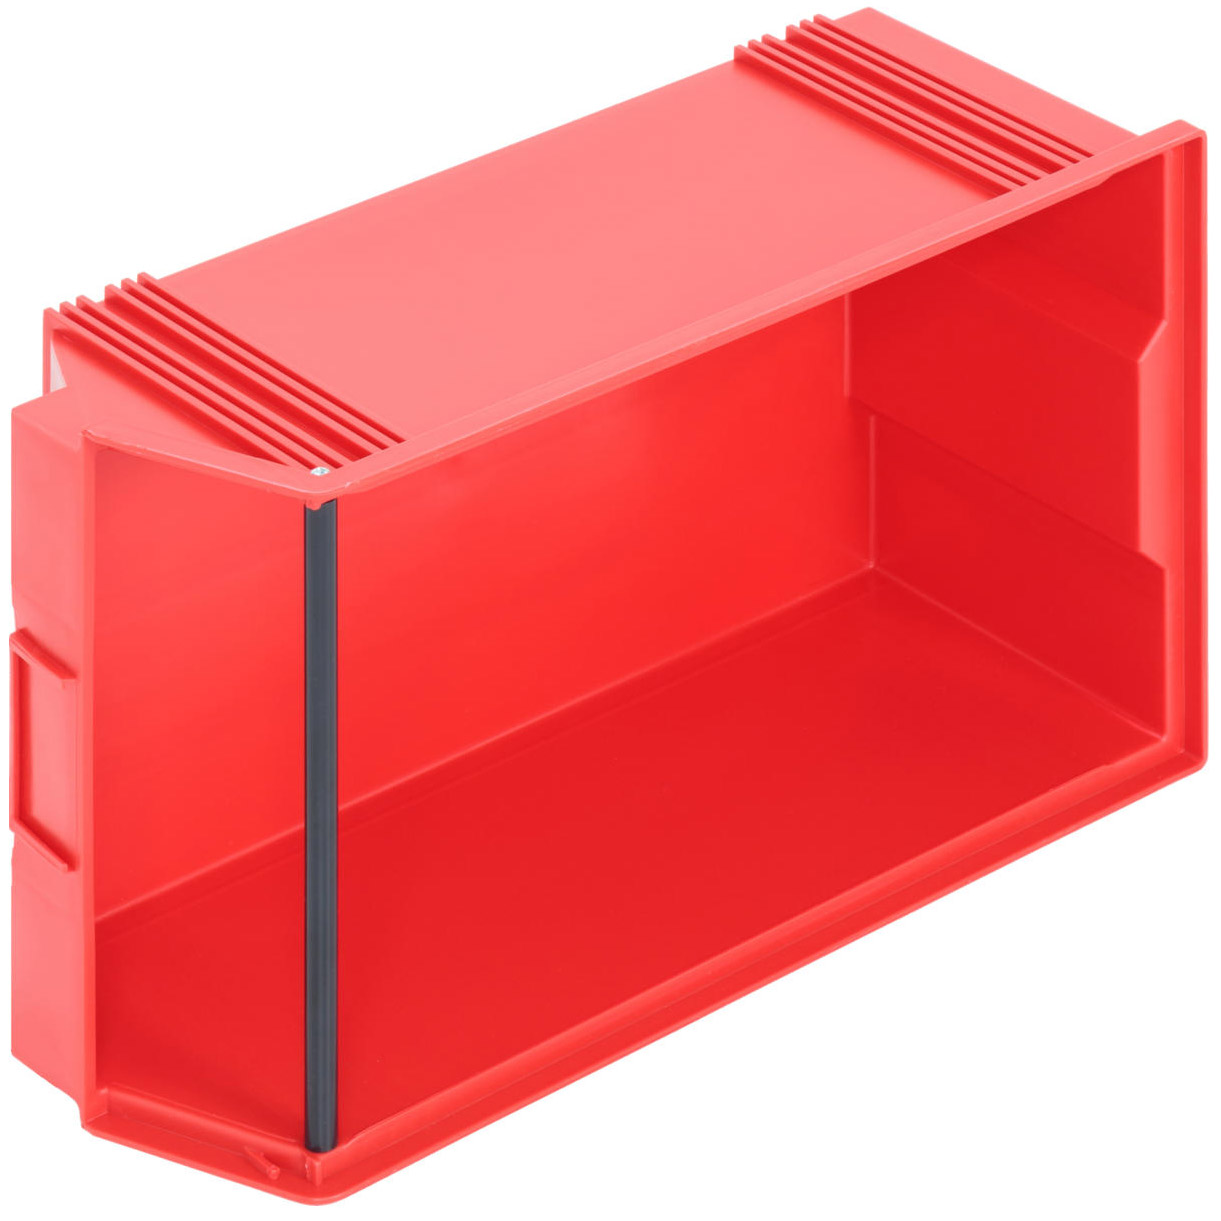 Sichtbox CLASSIC FB 2, LxBxH 510/450x300x200 mm, Gewicht 1400 g, 27 Liter, rot